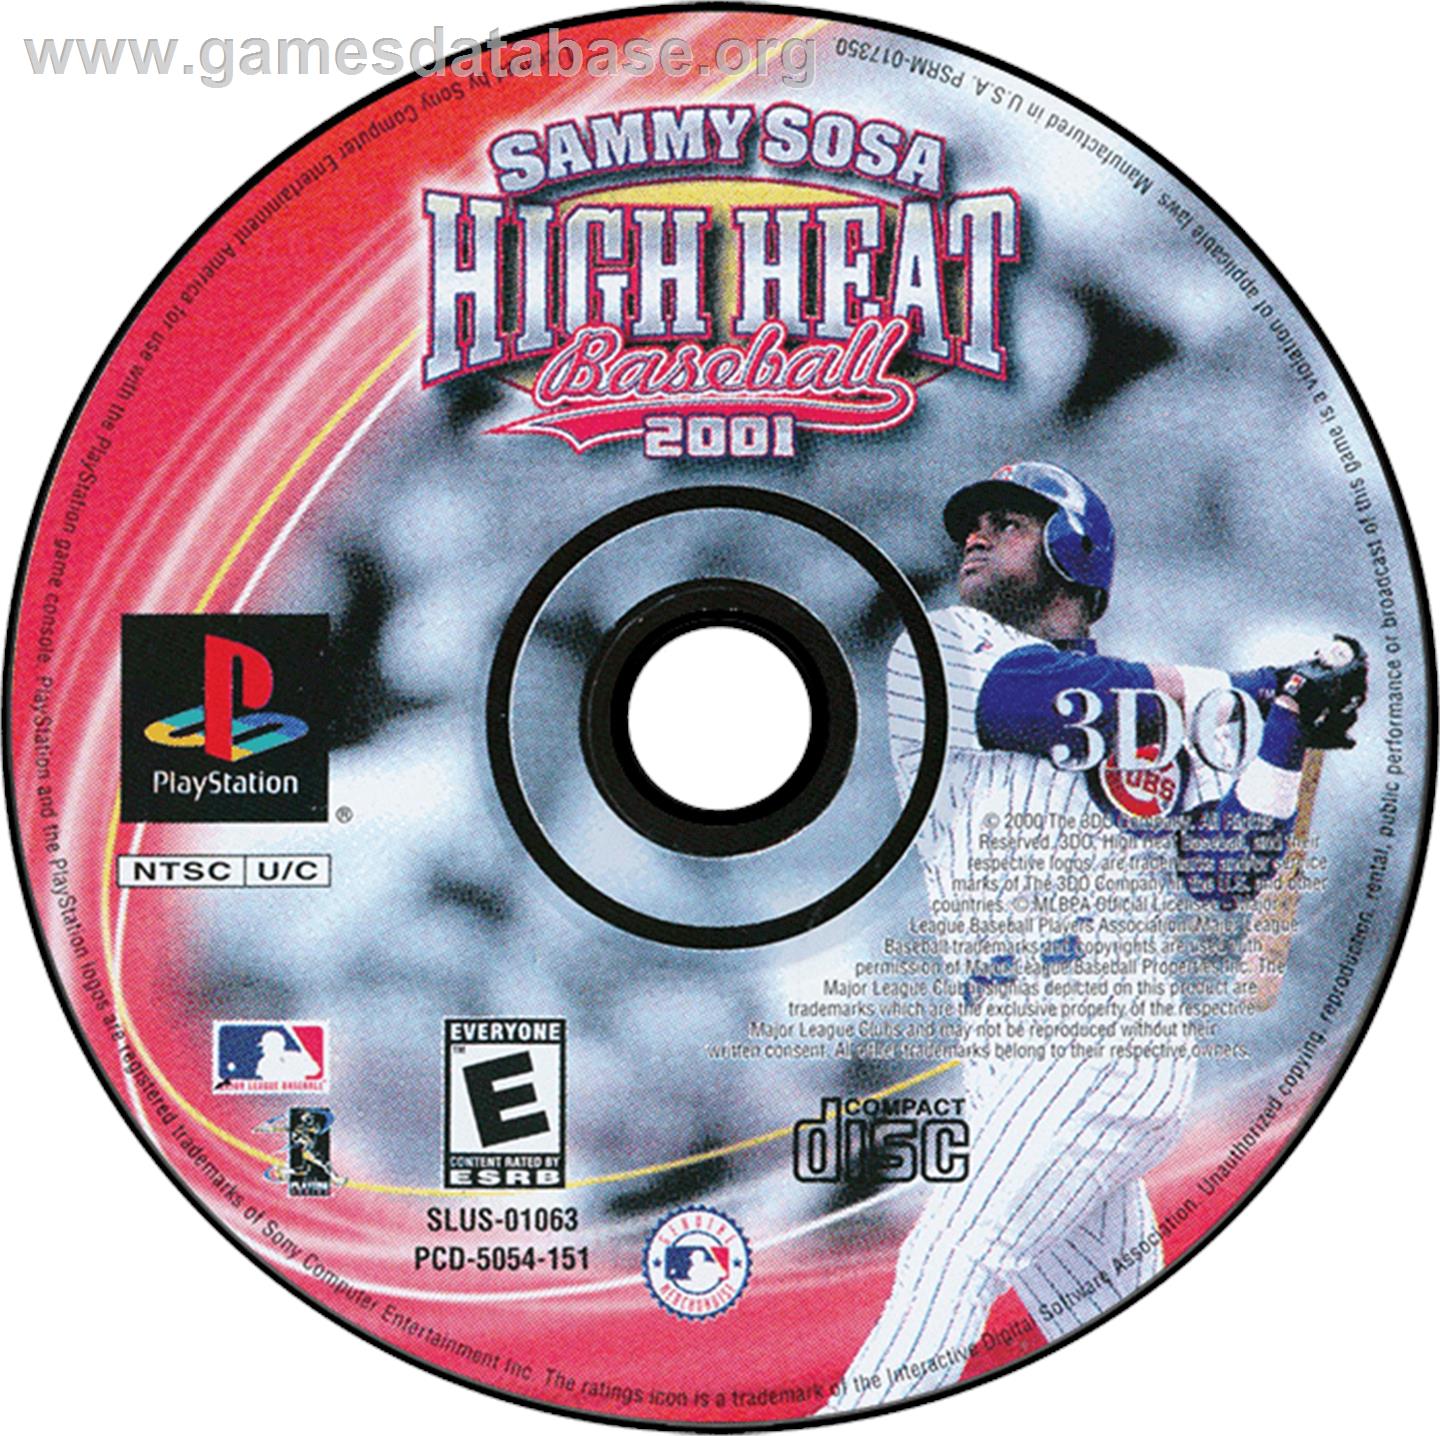 Sammy Sosa High Heat Baseball 2001 - Sony Playstation - Artwork - Disc